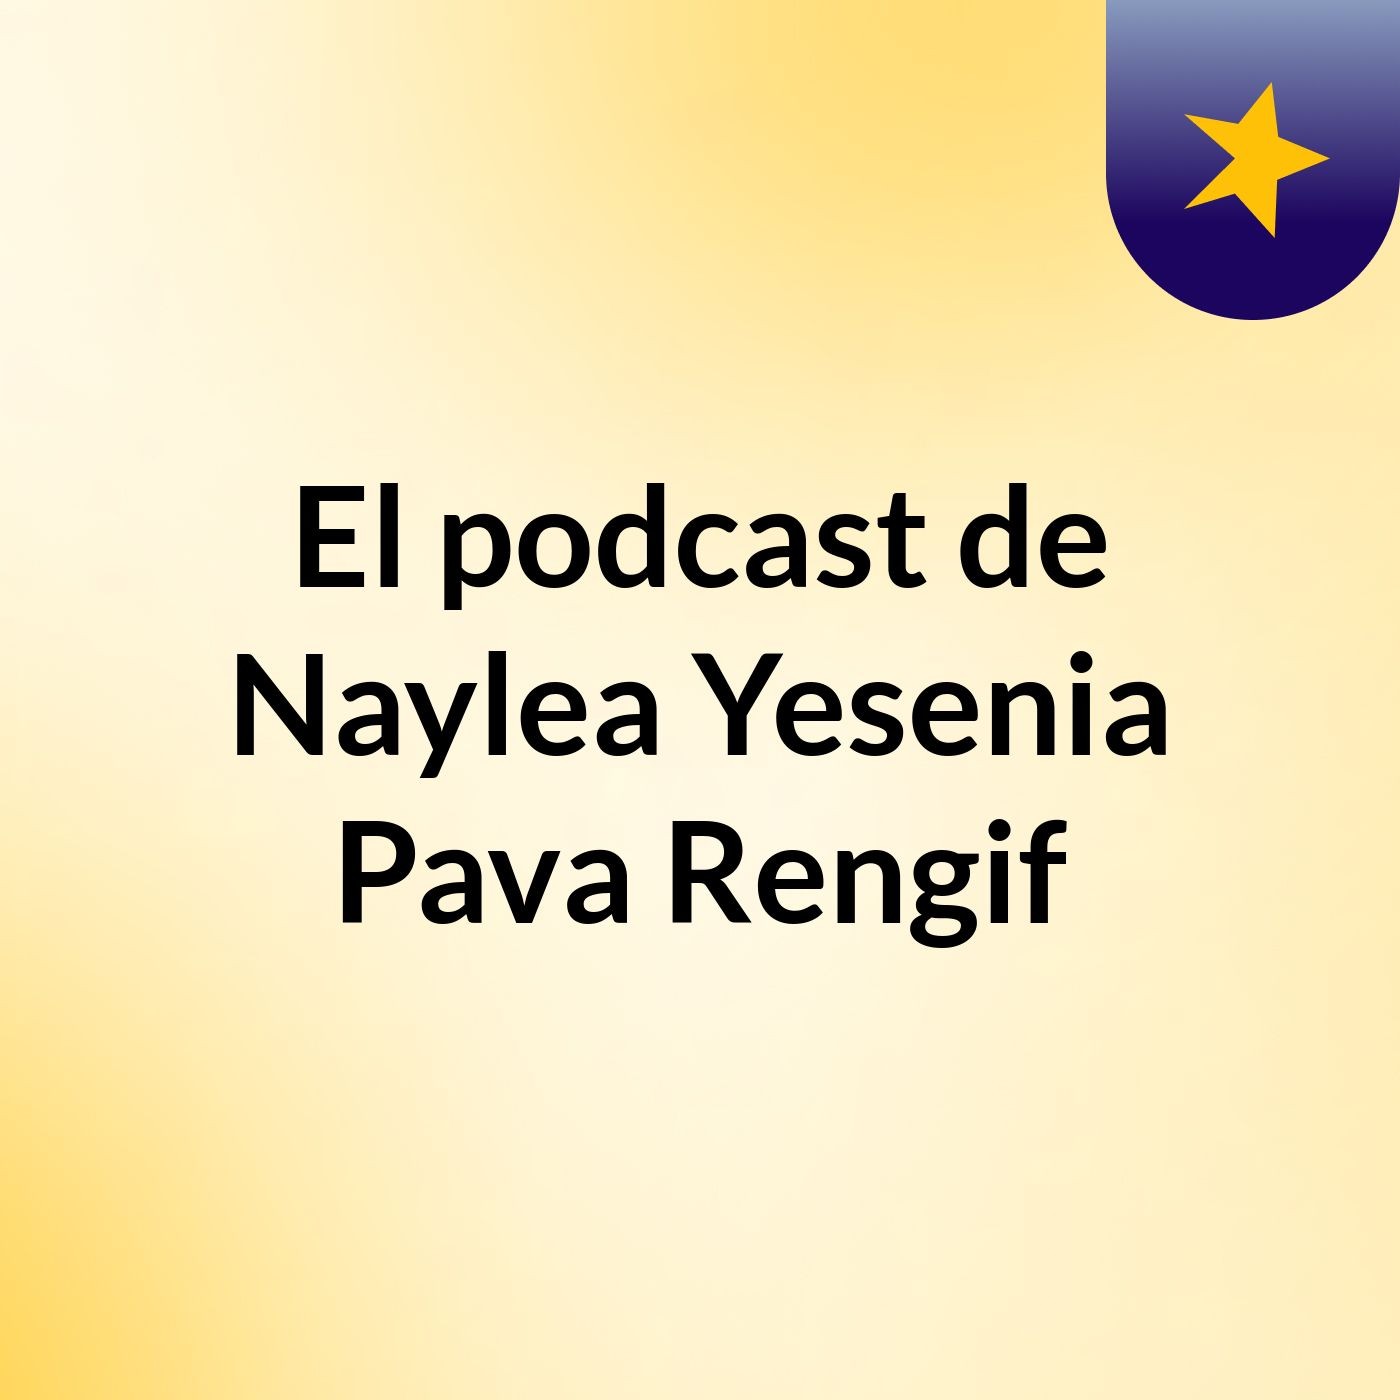 Episodio 6 - El podcast de Naylea Yesenia Pava Rengif